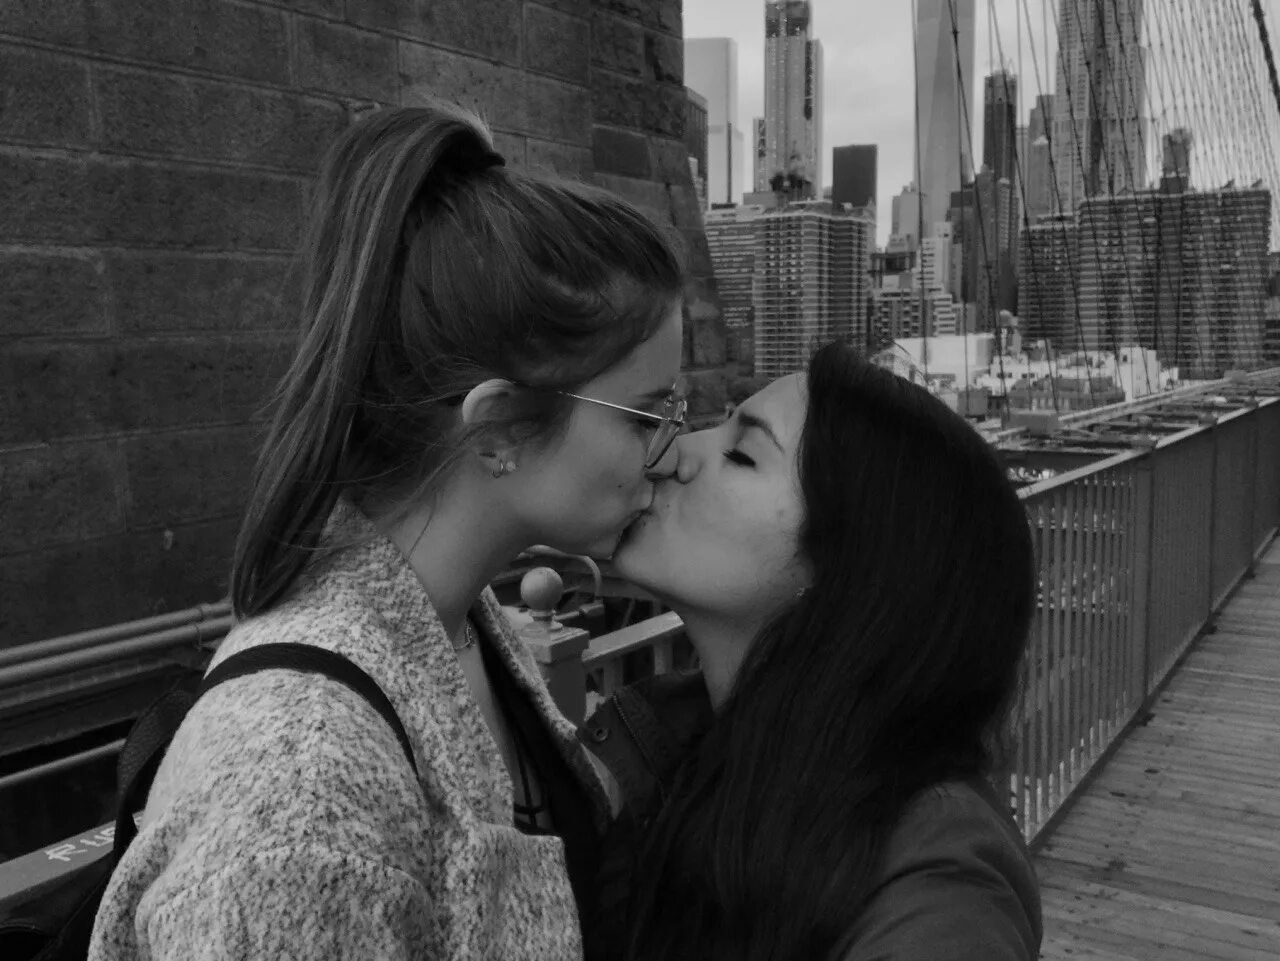 Lesbian studios. Поцелуй девушек. Девушки целуются. Поцелуй девушки с девушкой. Поцелуй двух девушек.